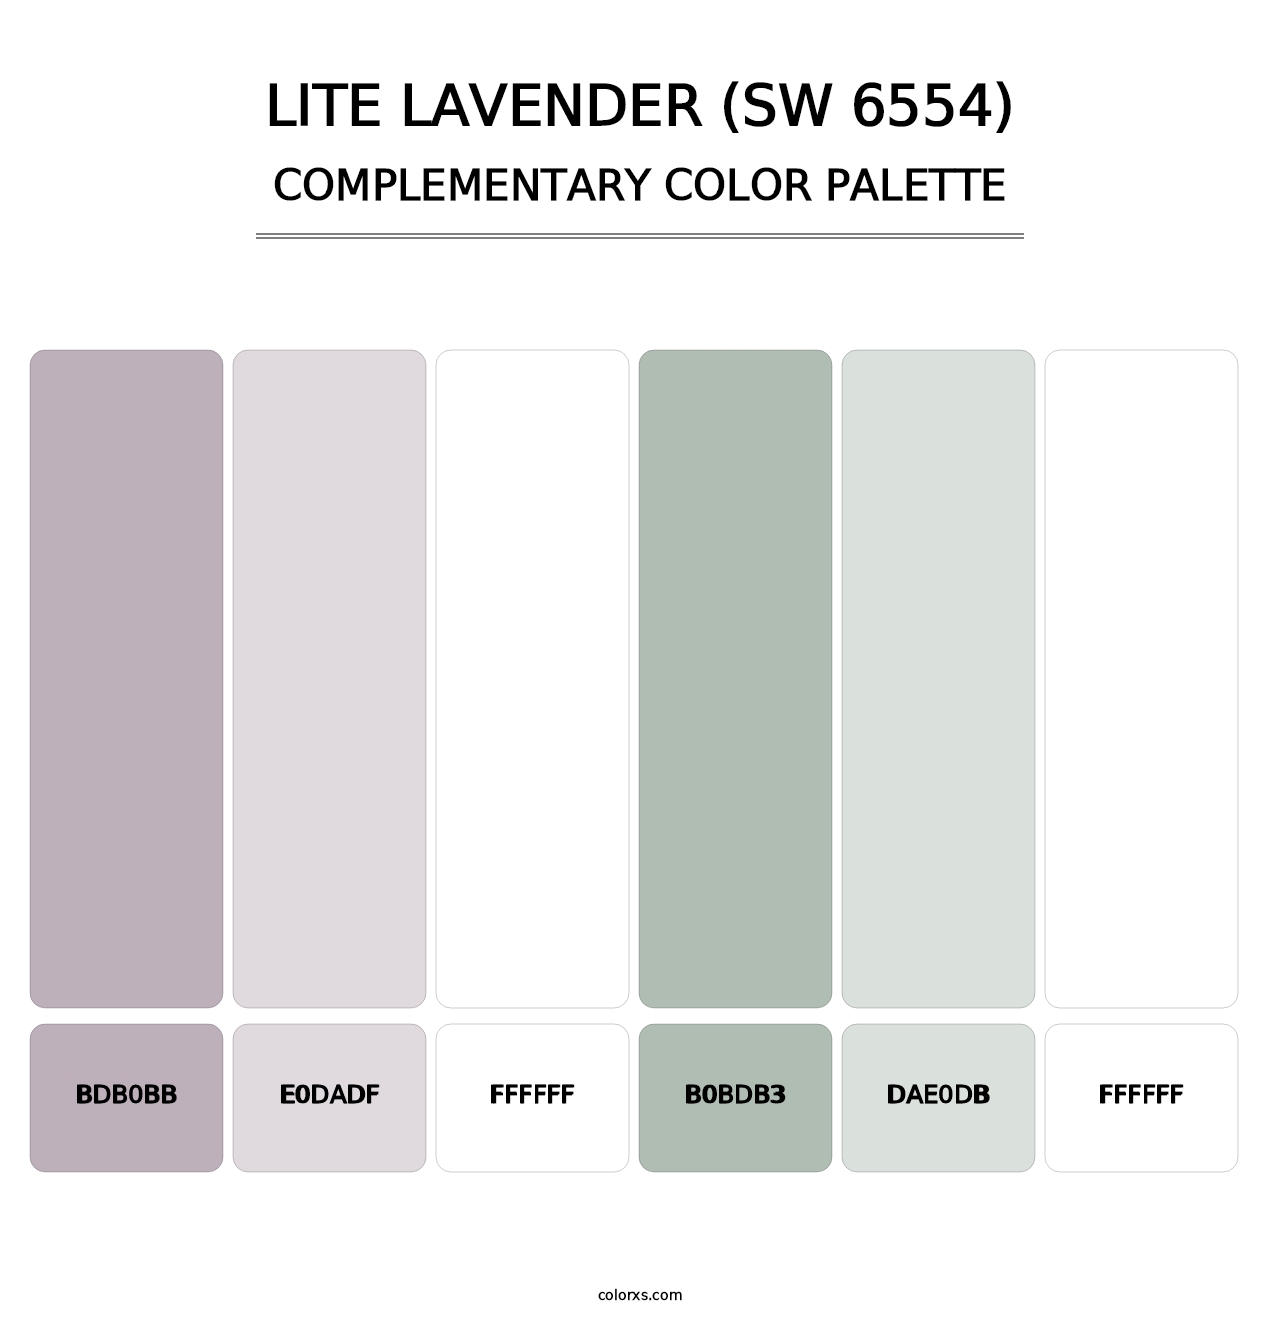 Lite Lavender (SW 6554) - Complementary Color Palette